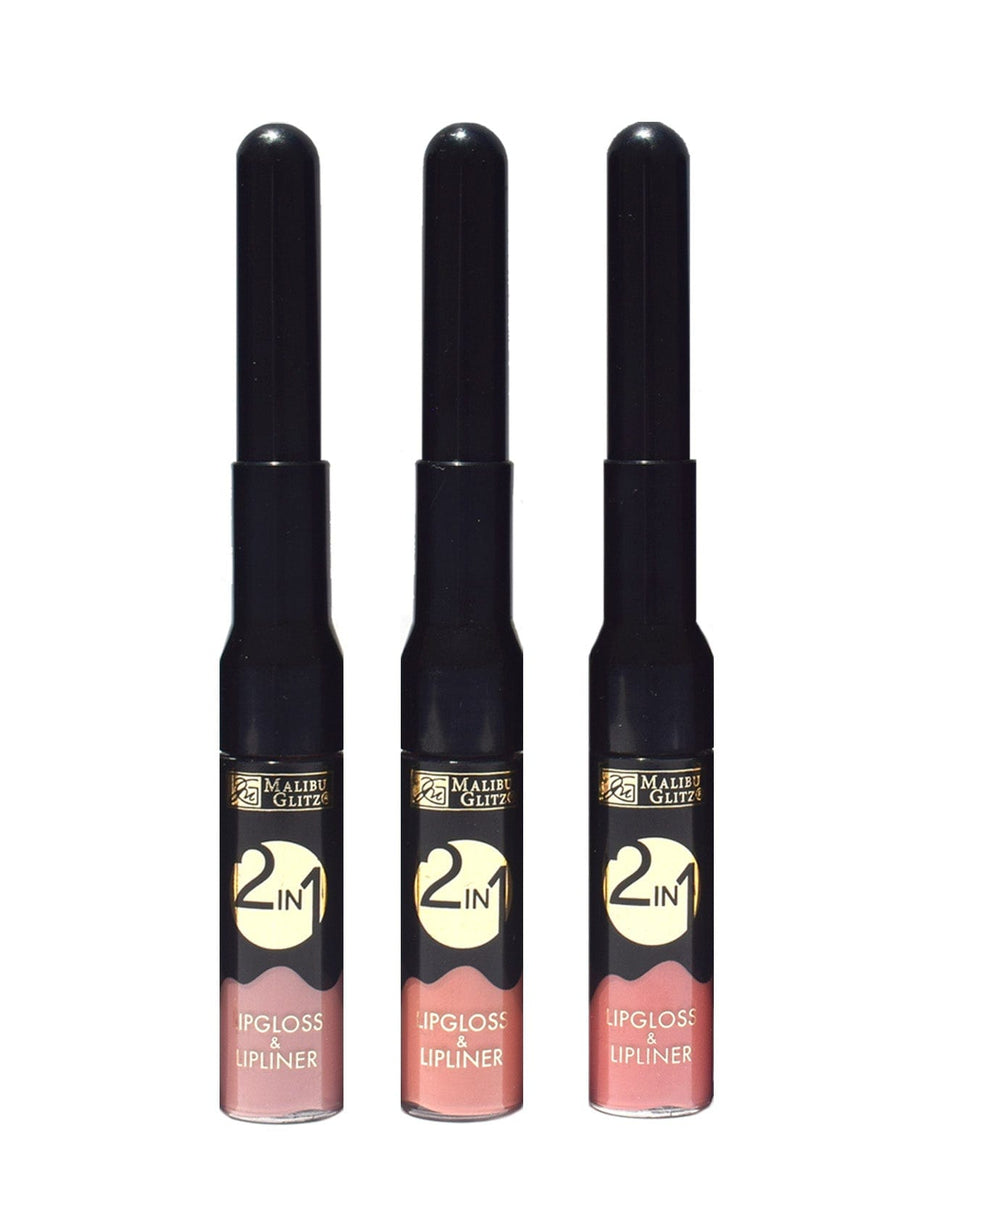 Malibu Glitz Neutral 2 in 1 Lip Gloss